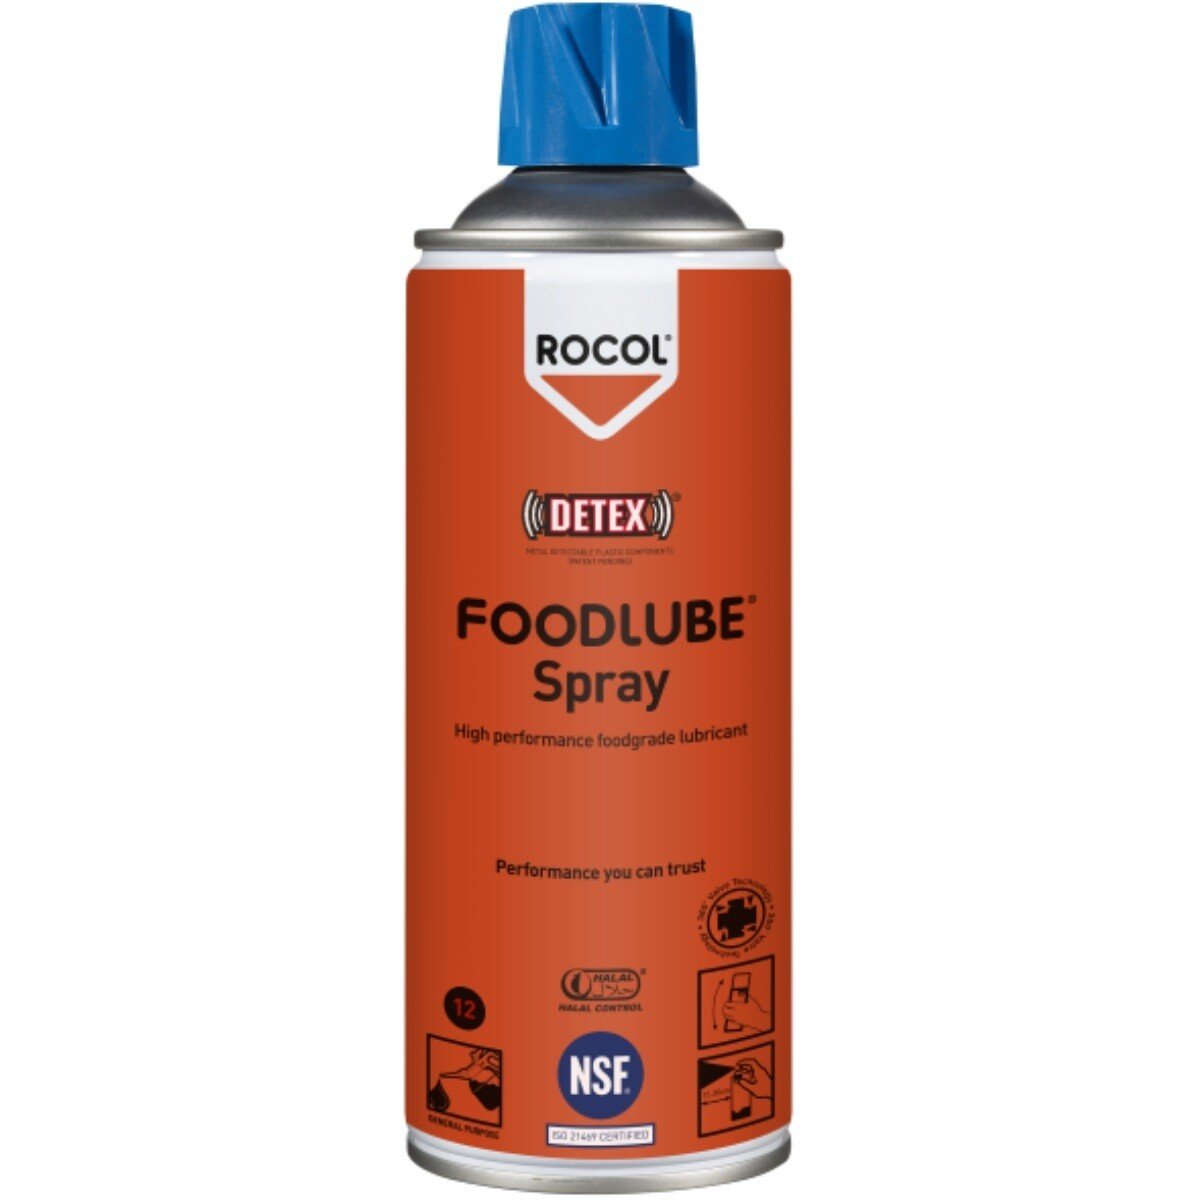 Rocol 15710 Foodlube Spray (NSF Registered) 300ml